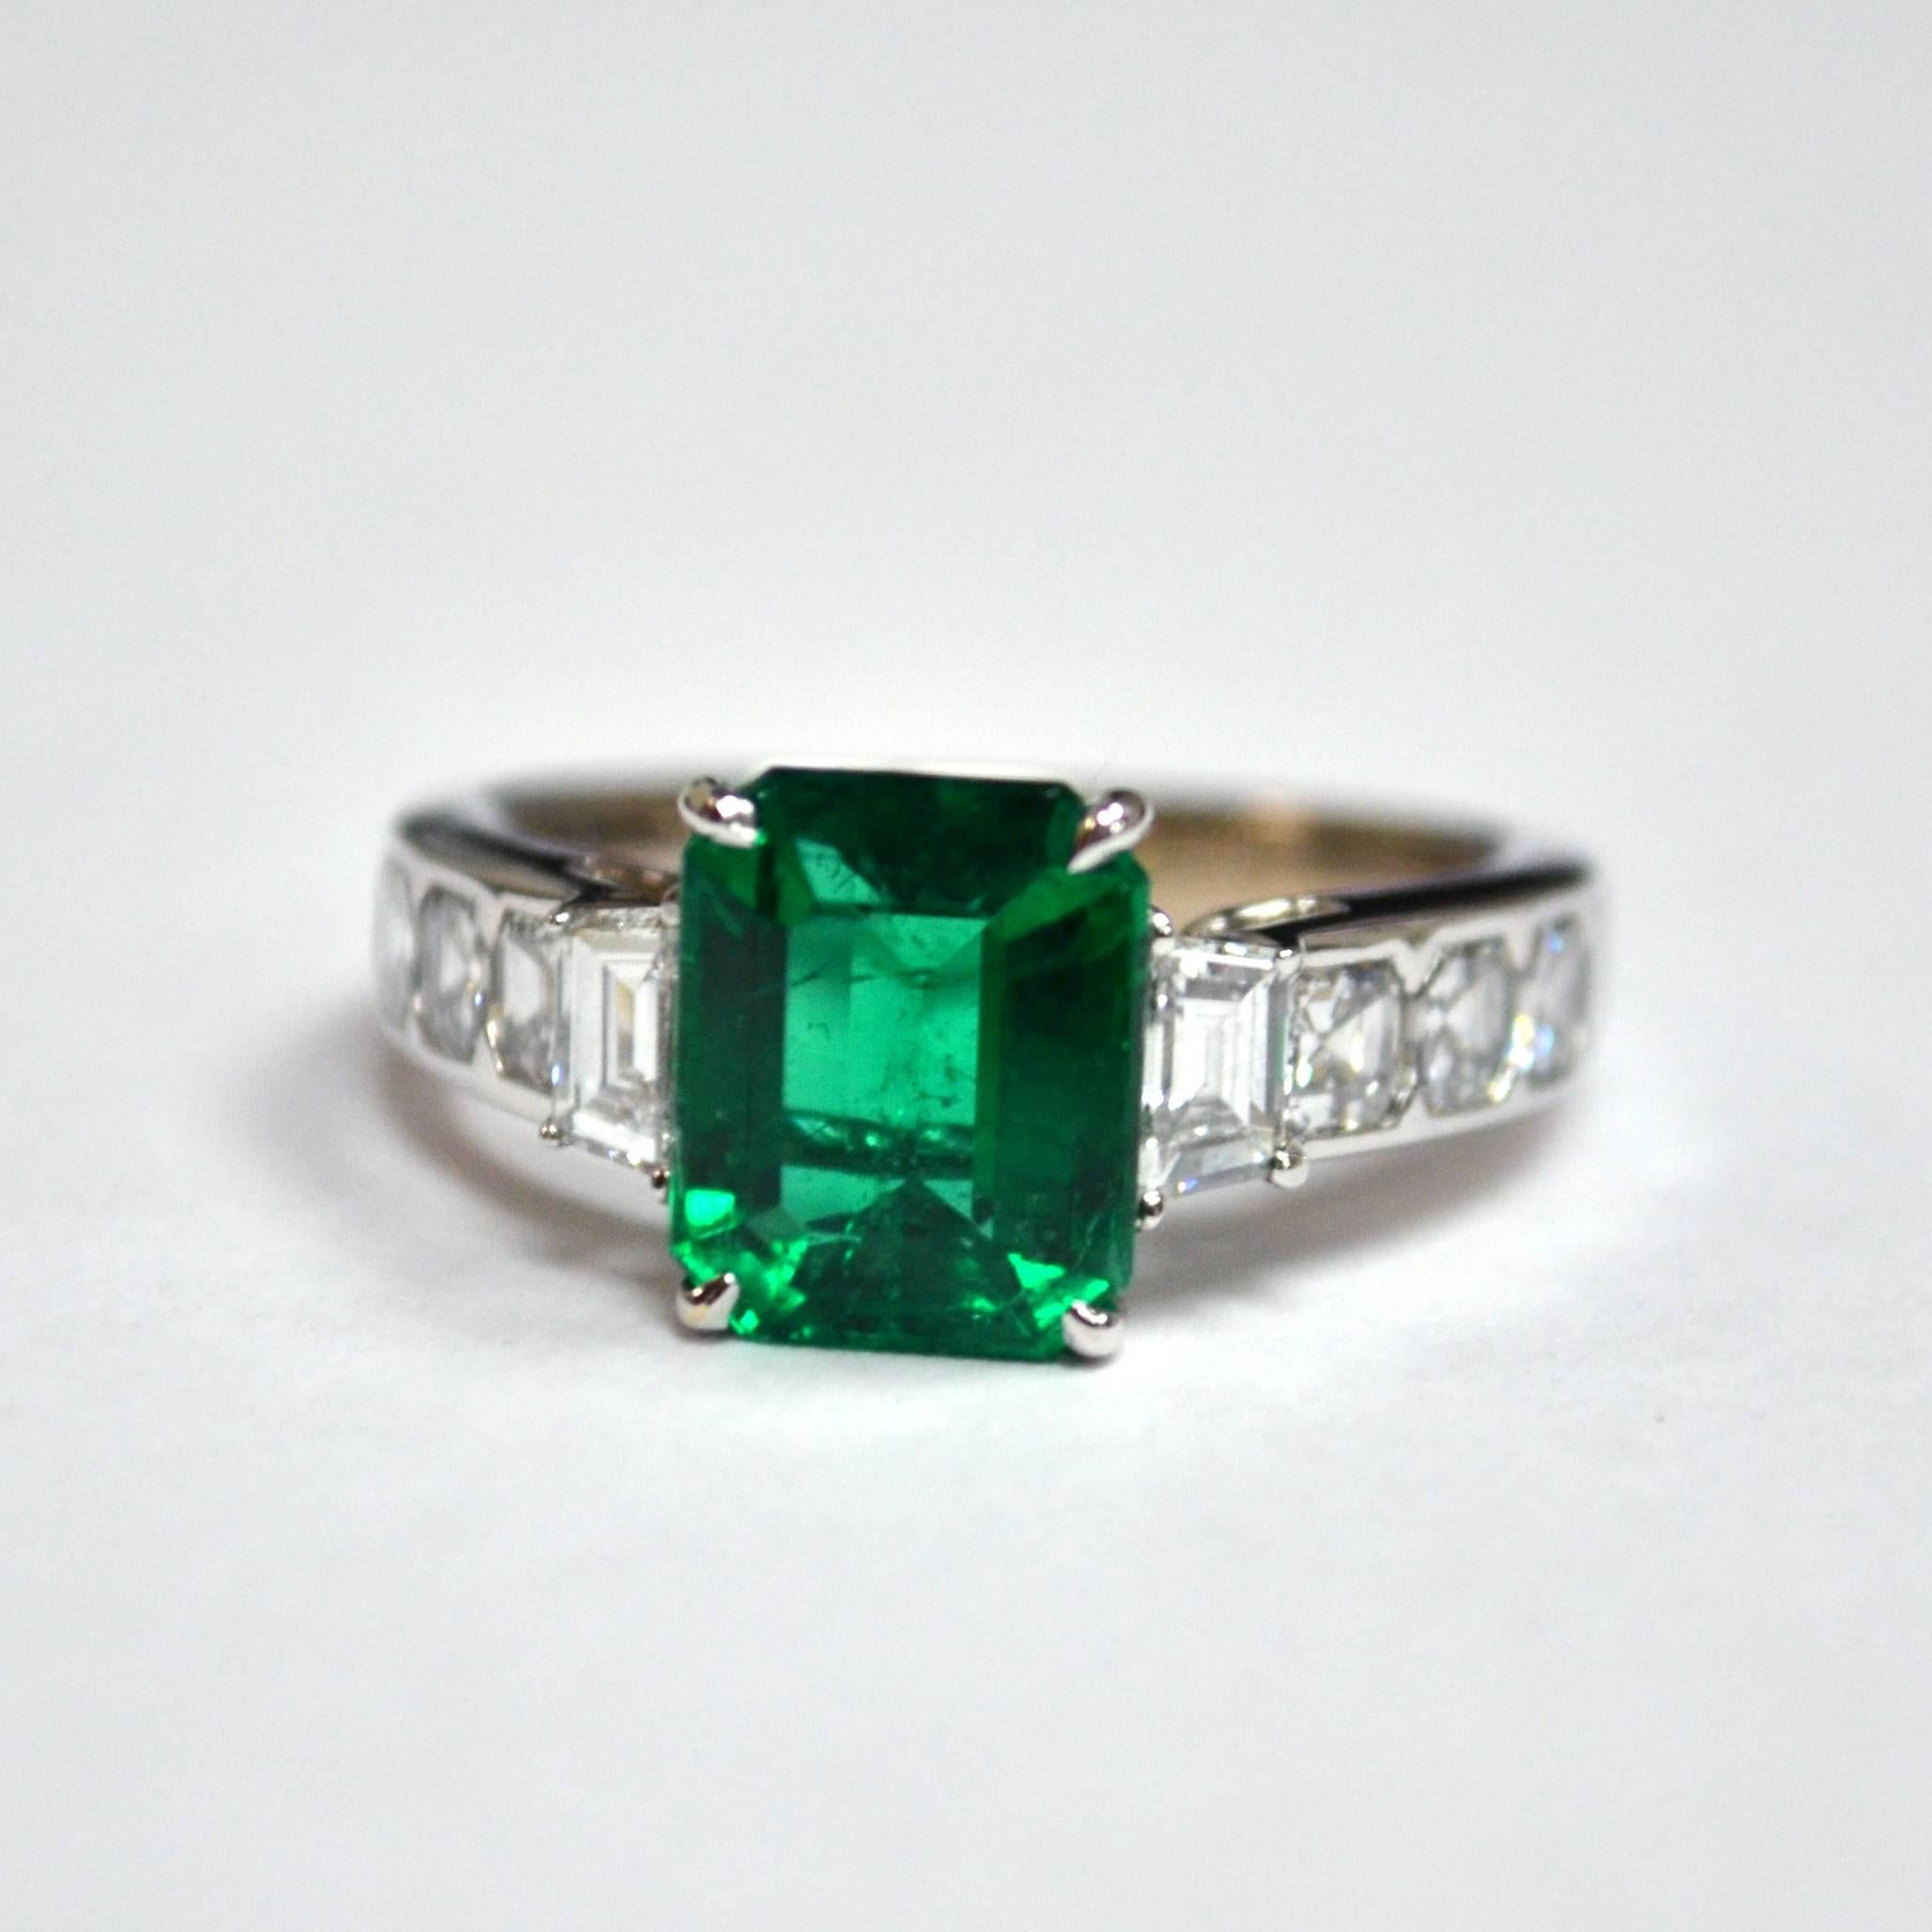 Ring in 18K white gold set with an emerald cut Zambian Emerald (2.36 carat), 2 trapezoid cut Diamonds (0.33 carat), and 8 asscher cut Diamonds (1.34 carat).

Ring Size US 6.5
*Complimentary resizing service*